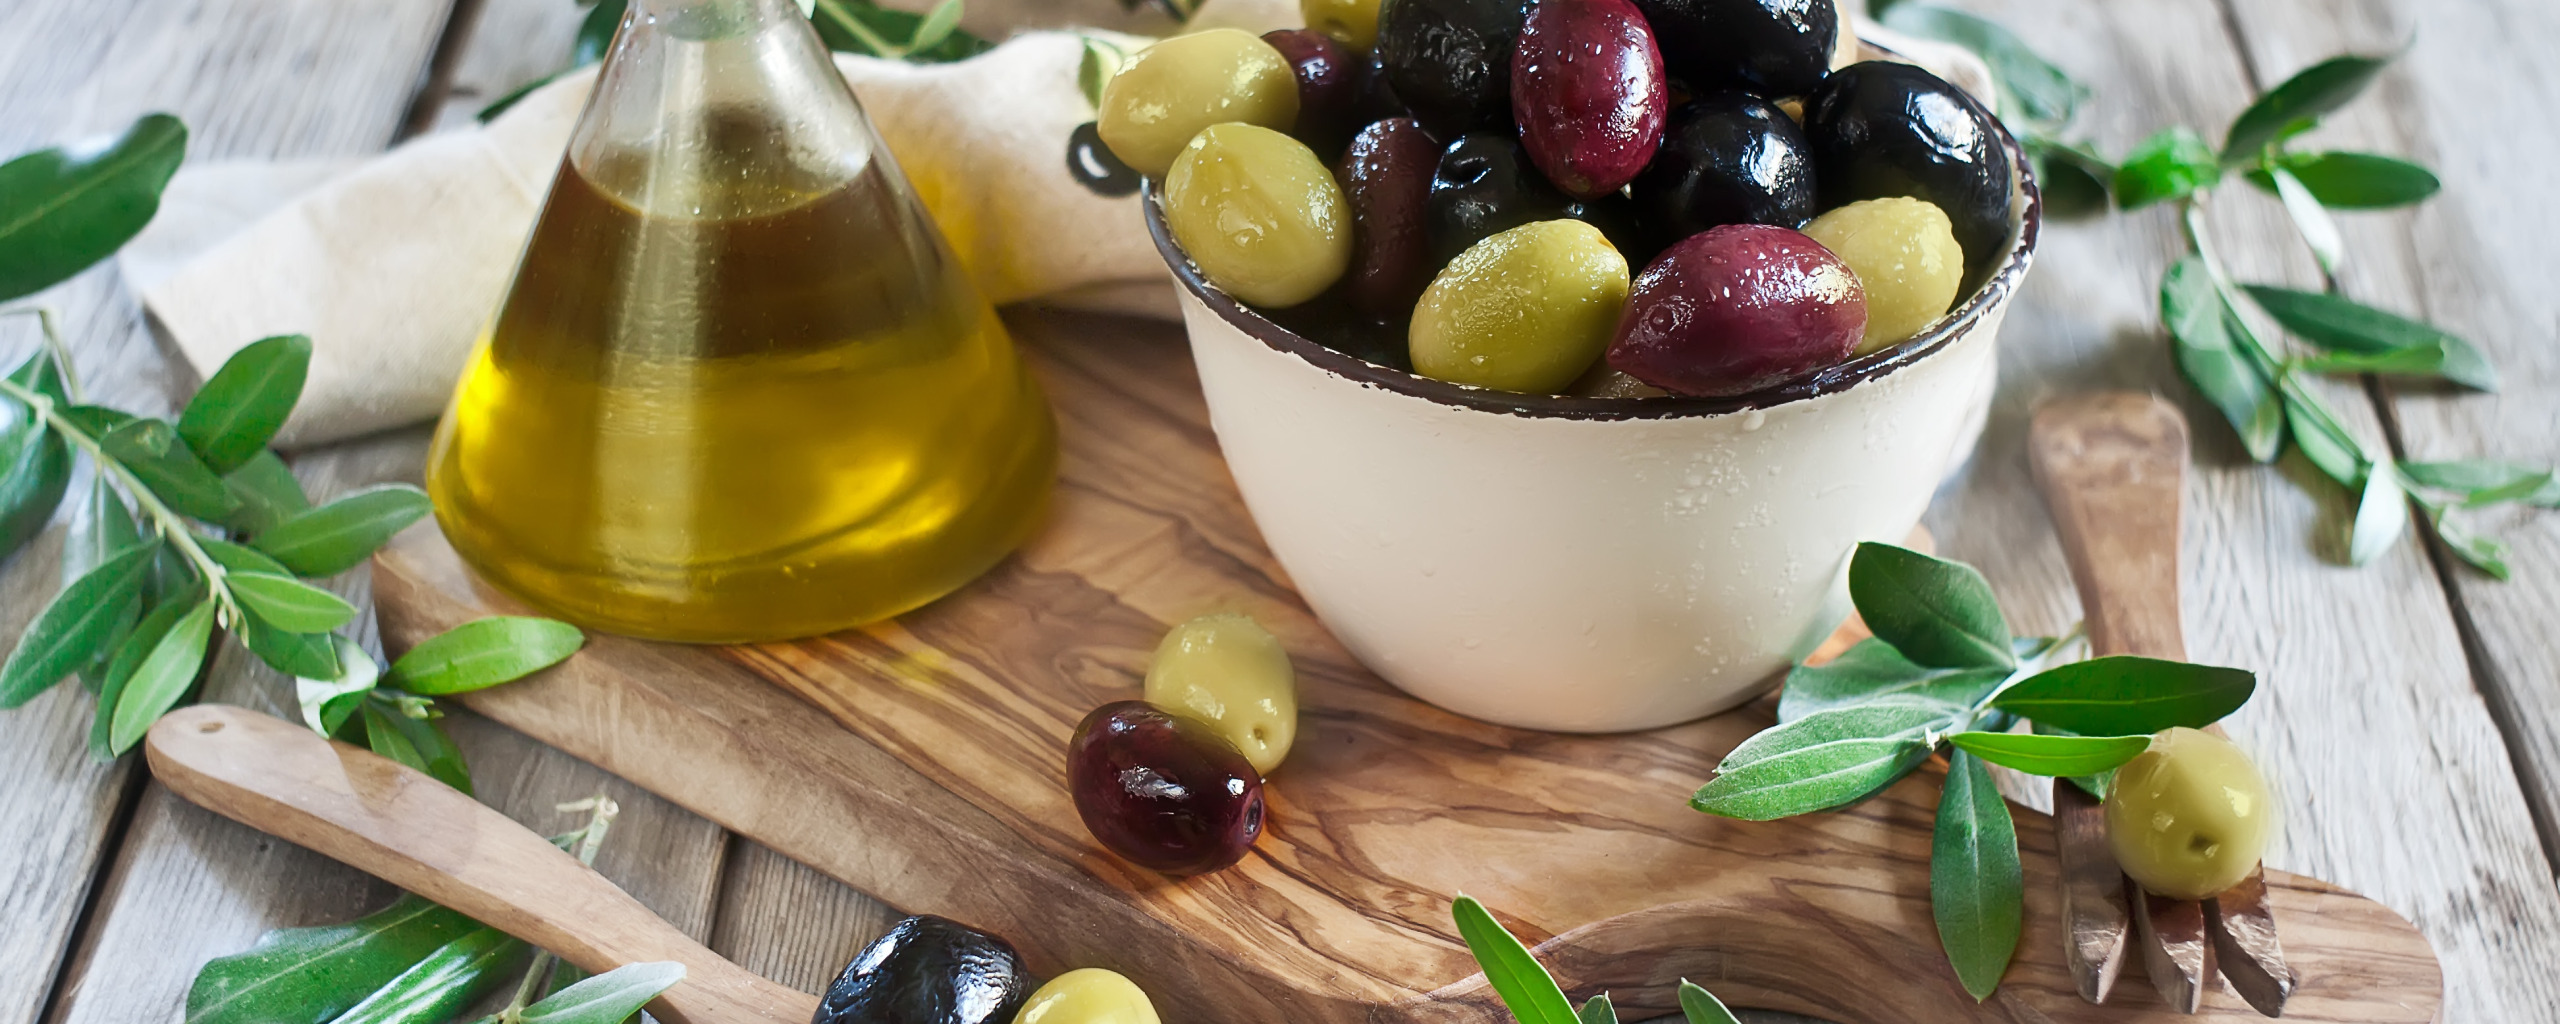 Оливковое масло замерзло в холодильнике. Оливки. Маслины. Оливковое масло и маслины. Оливки фото.